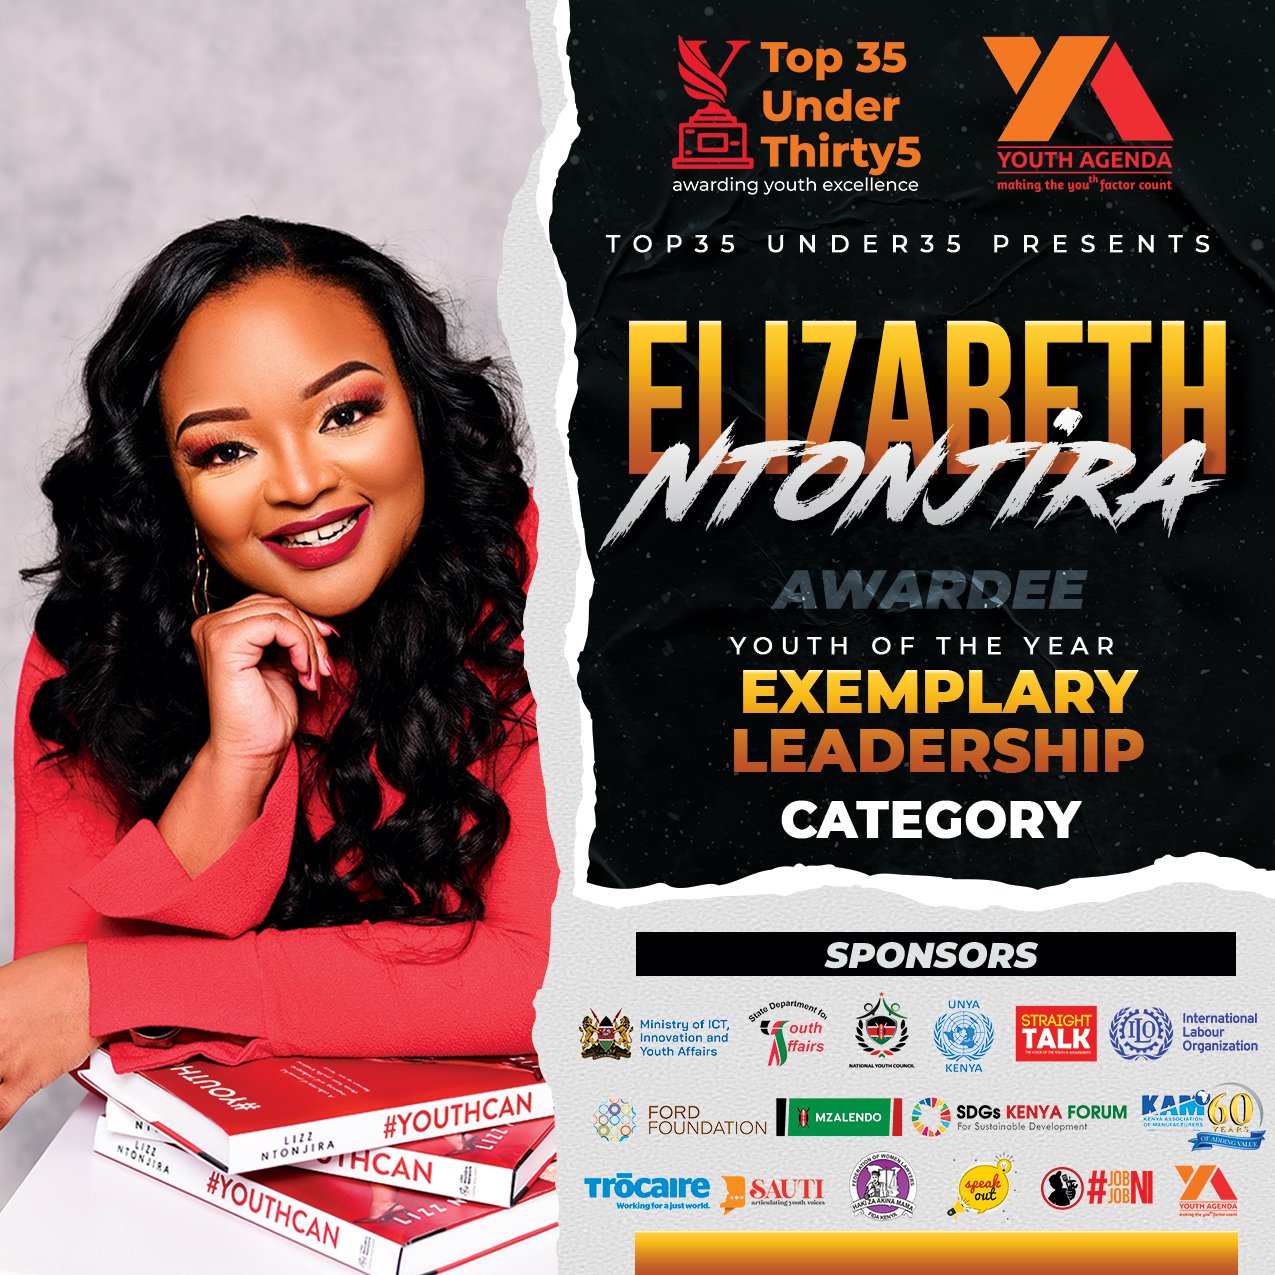 Lizz Ntonjira Top 35 Under 35 Awards 2021 - Youth of the Year Exemplary Leadership Category